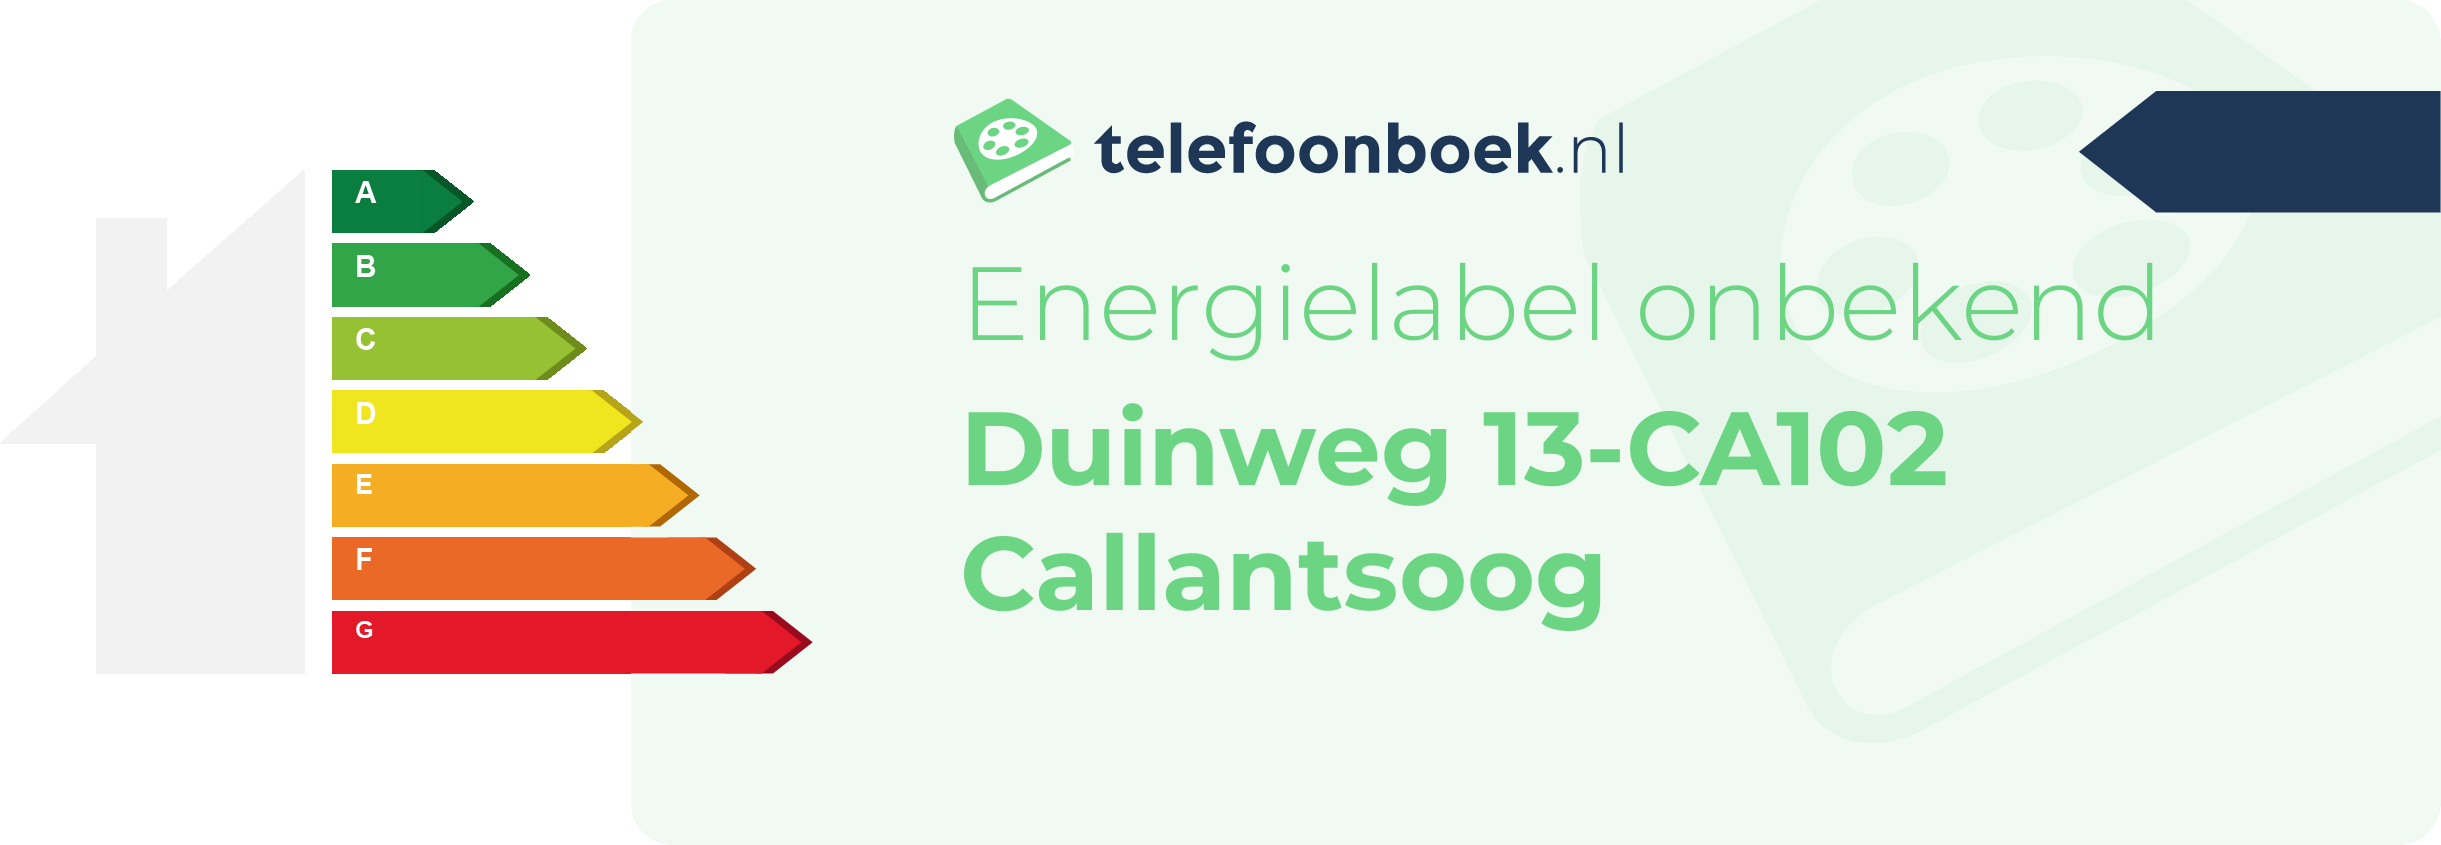 Energielabel Duinweg 13-CA102 Callantsoog